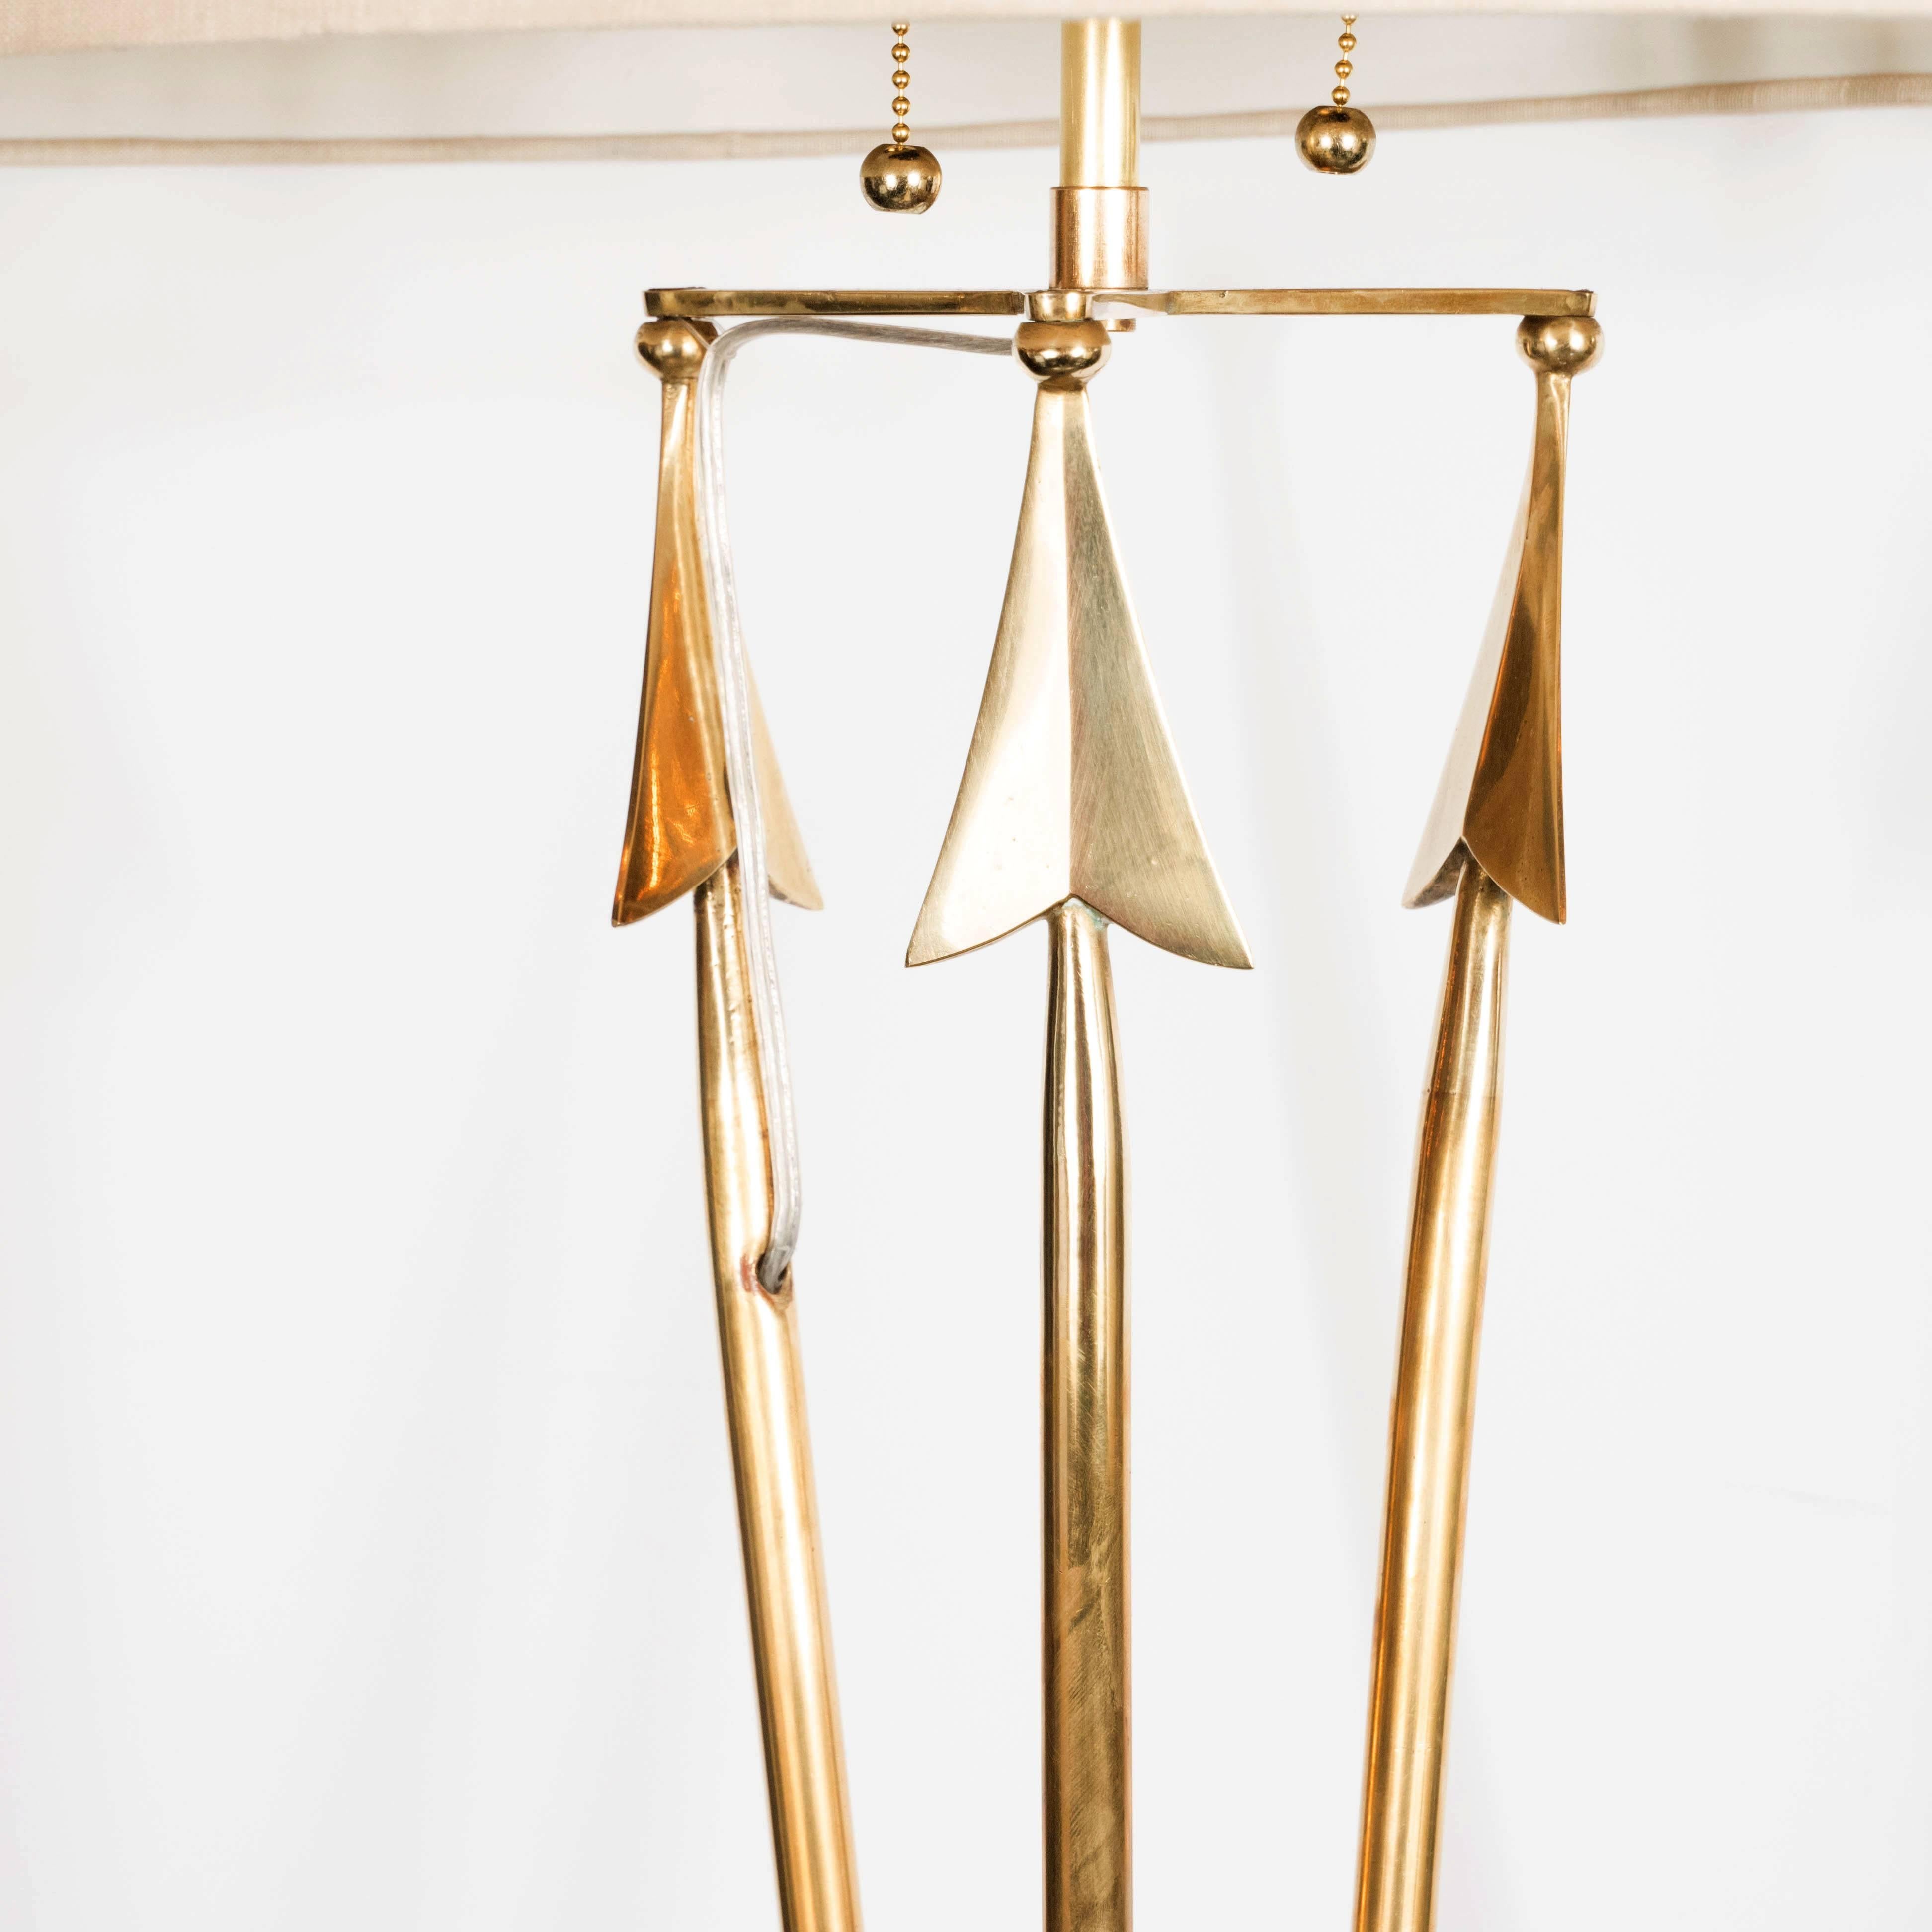 Mid-20th Century Pair of Italian Mid-Century Modern Brass Arrow Form Lamps, Manner of Gio Ponti